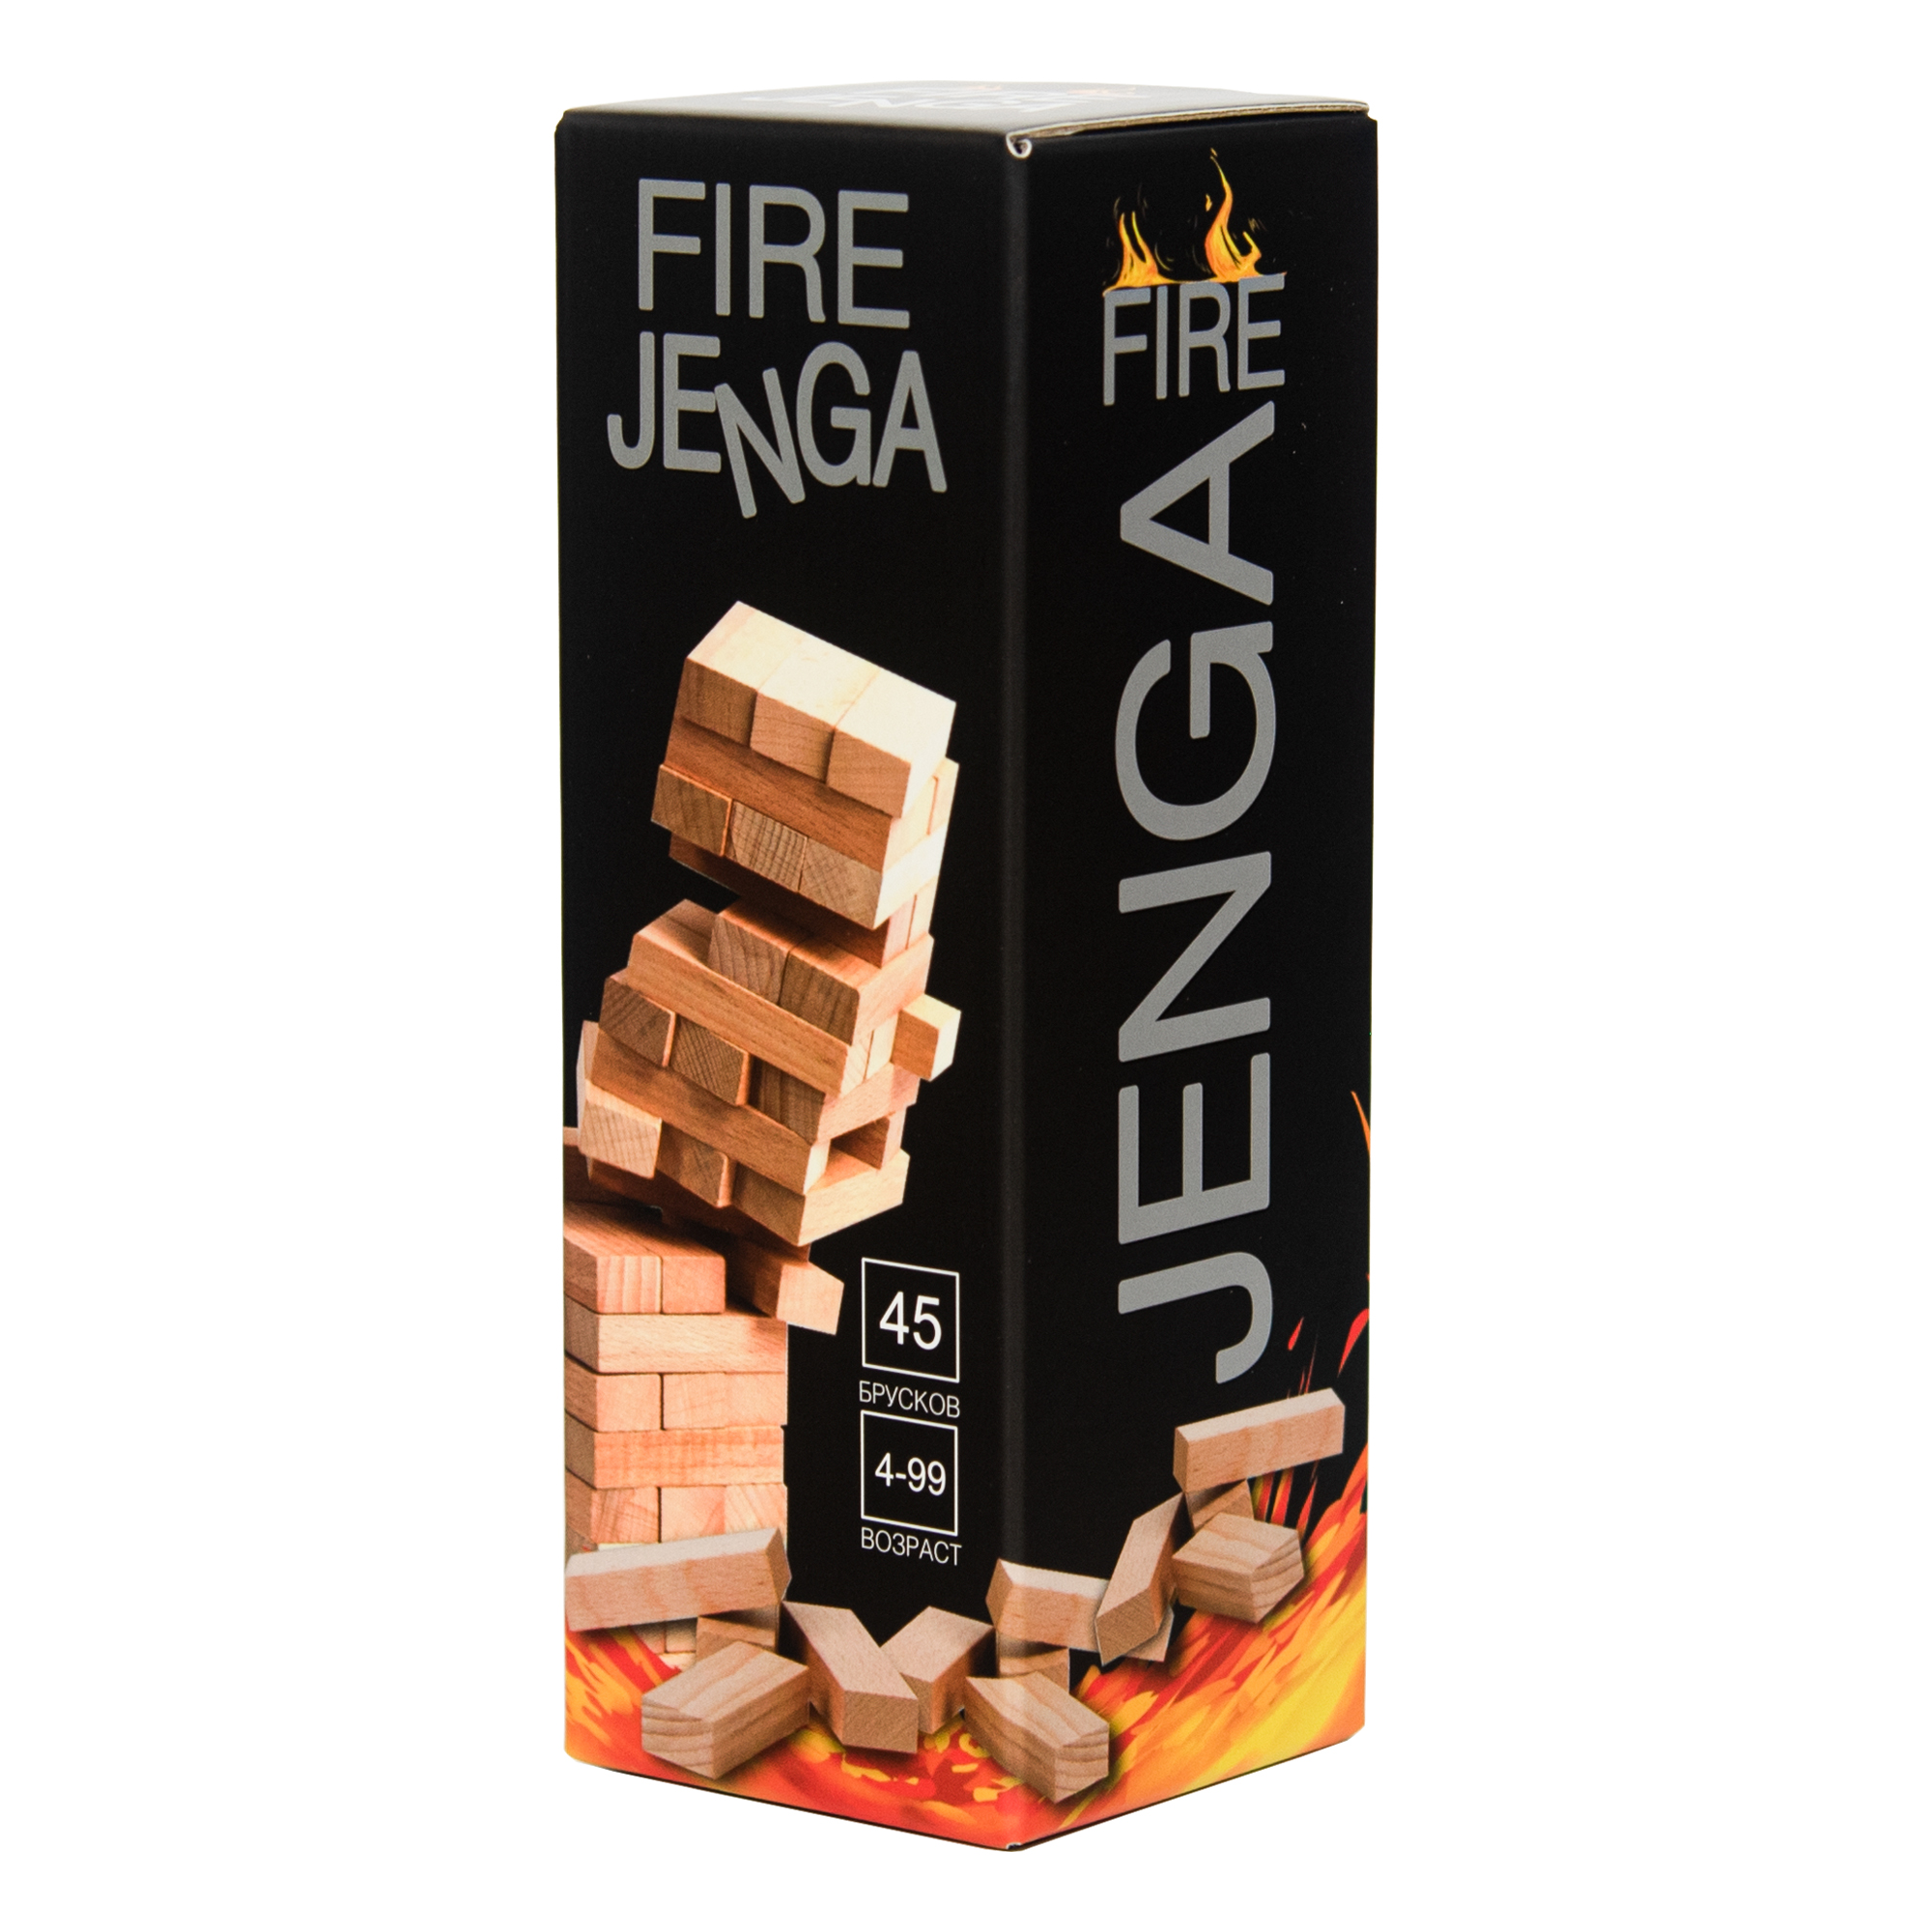 Floor plan "Fire Jenga" 30963